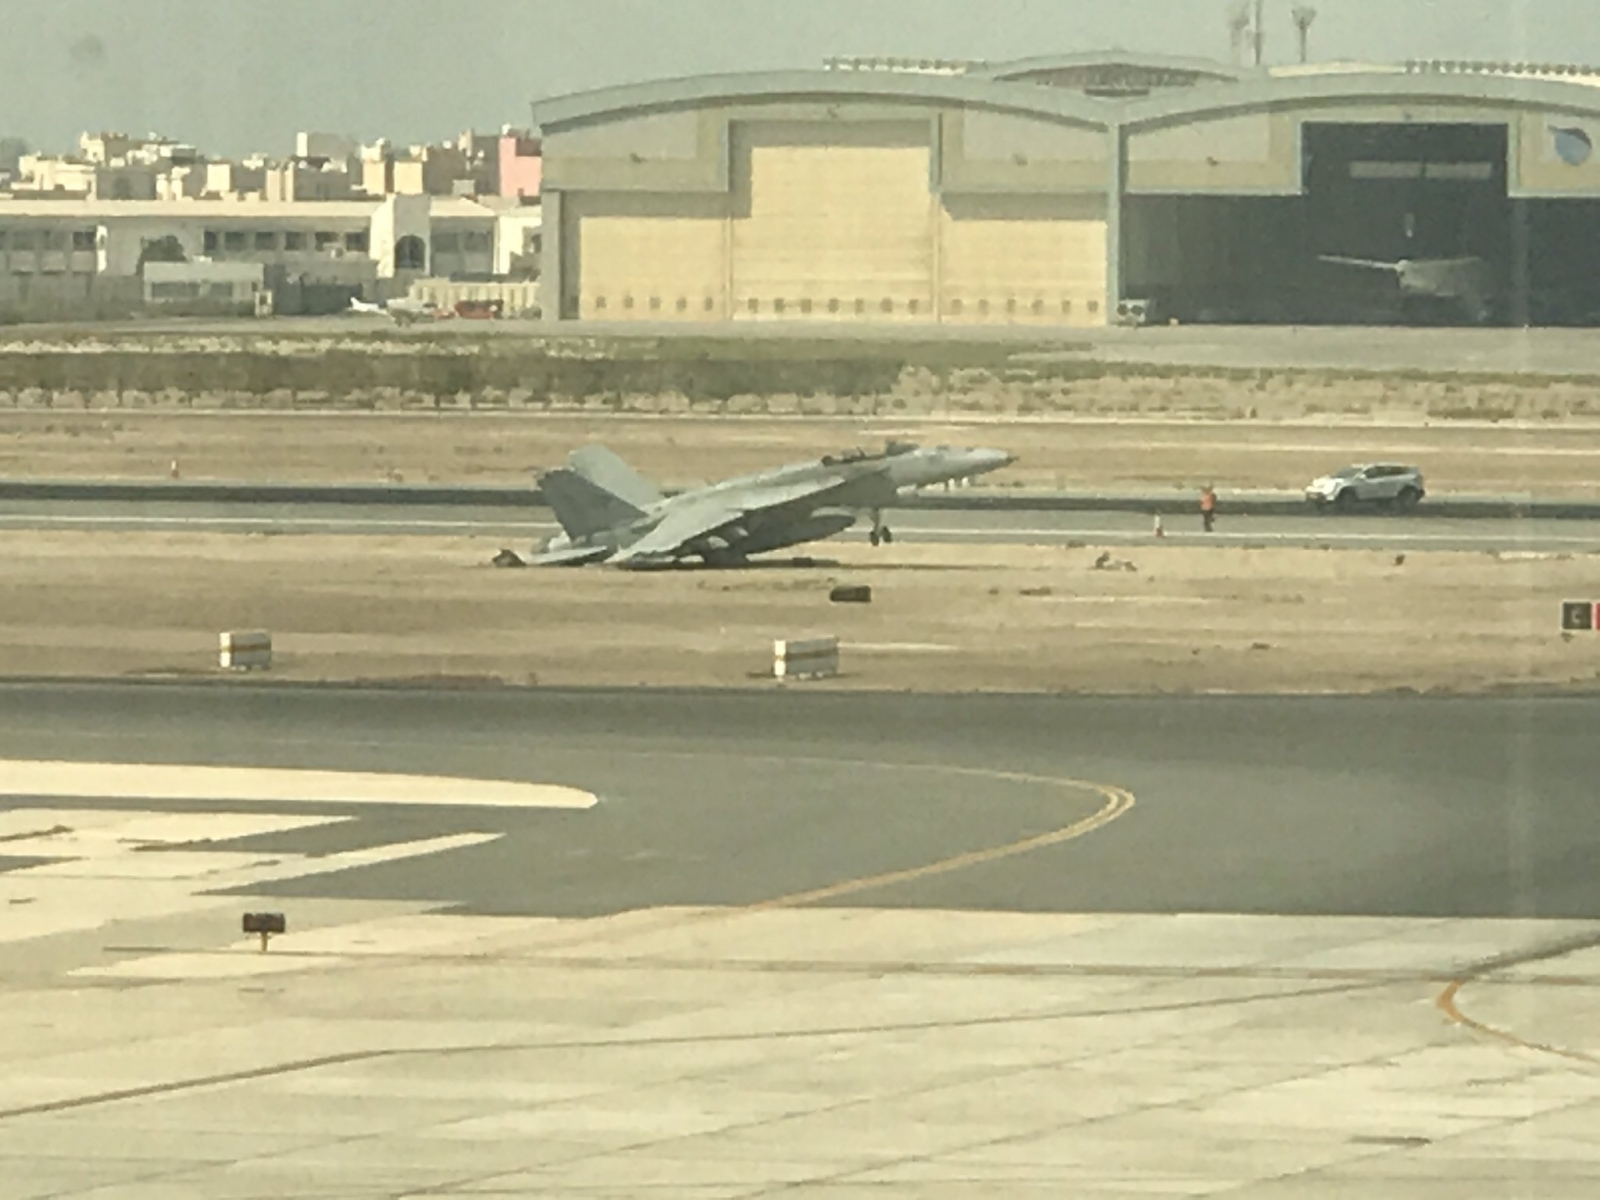 weekenders-us-fighter-jet-crash-lands-at-bahrain-international-airport